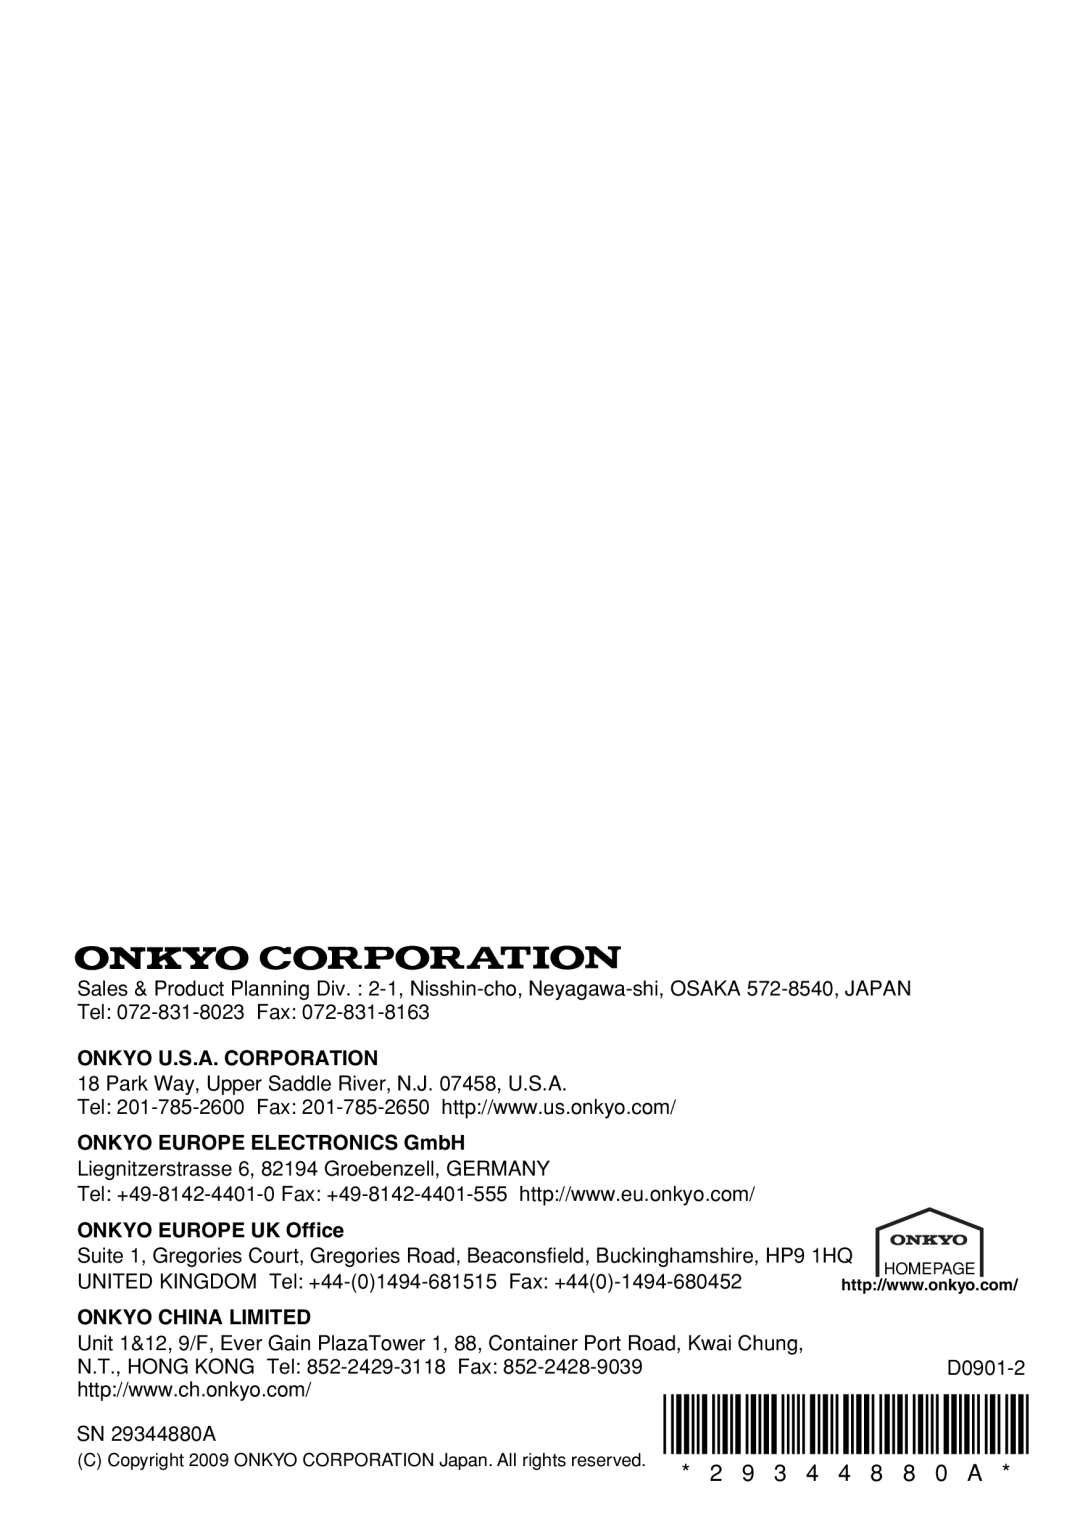 Onkyo D0901-2, DS-A3 2 9 3 4 4 8 8 0 A, Onkyo U.S.A. Corporation, ONKYO EUROPE ELECTRONICS GmbH, ONKYO EUROPE UK Office 